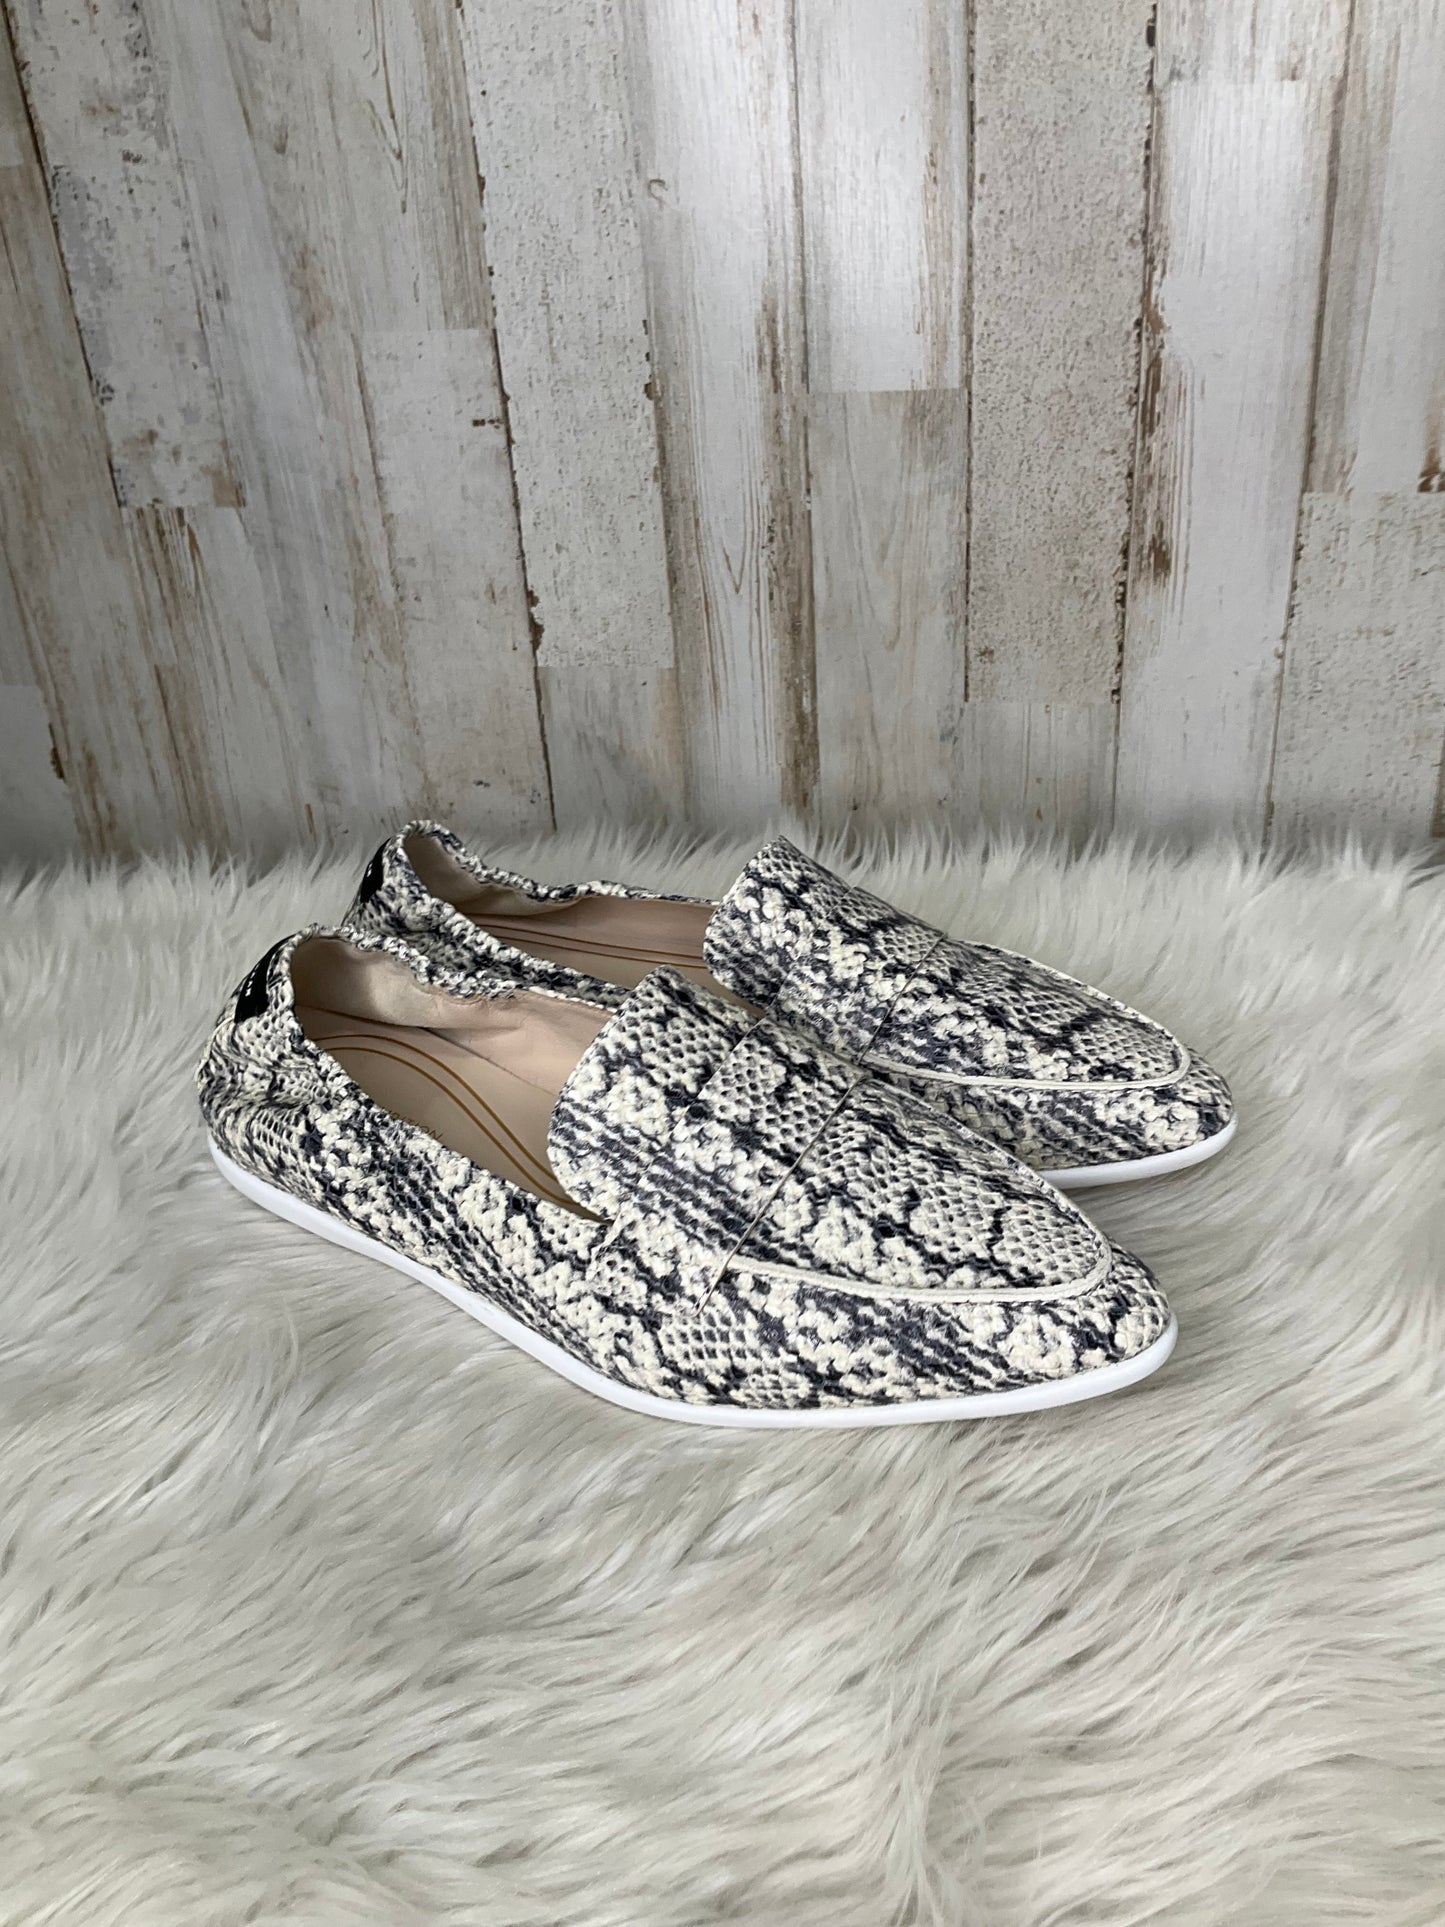 Snakeskin Print Sandals Flats Cole-haan, Size 9.5